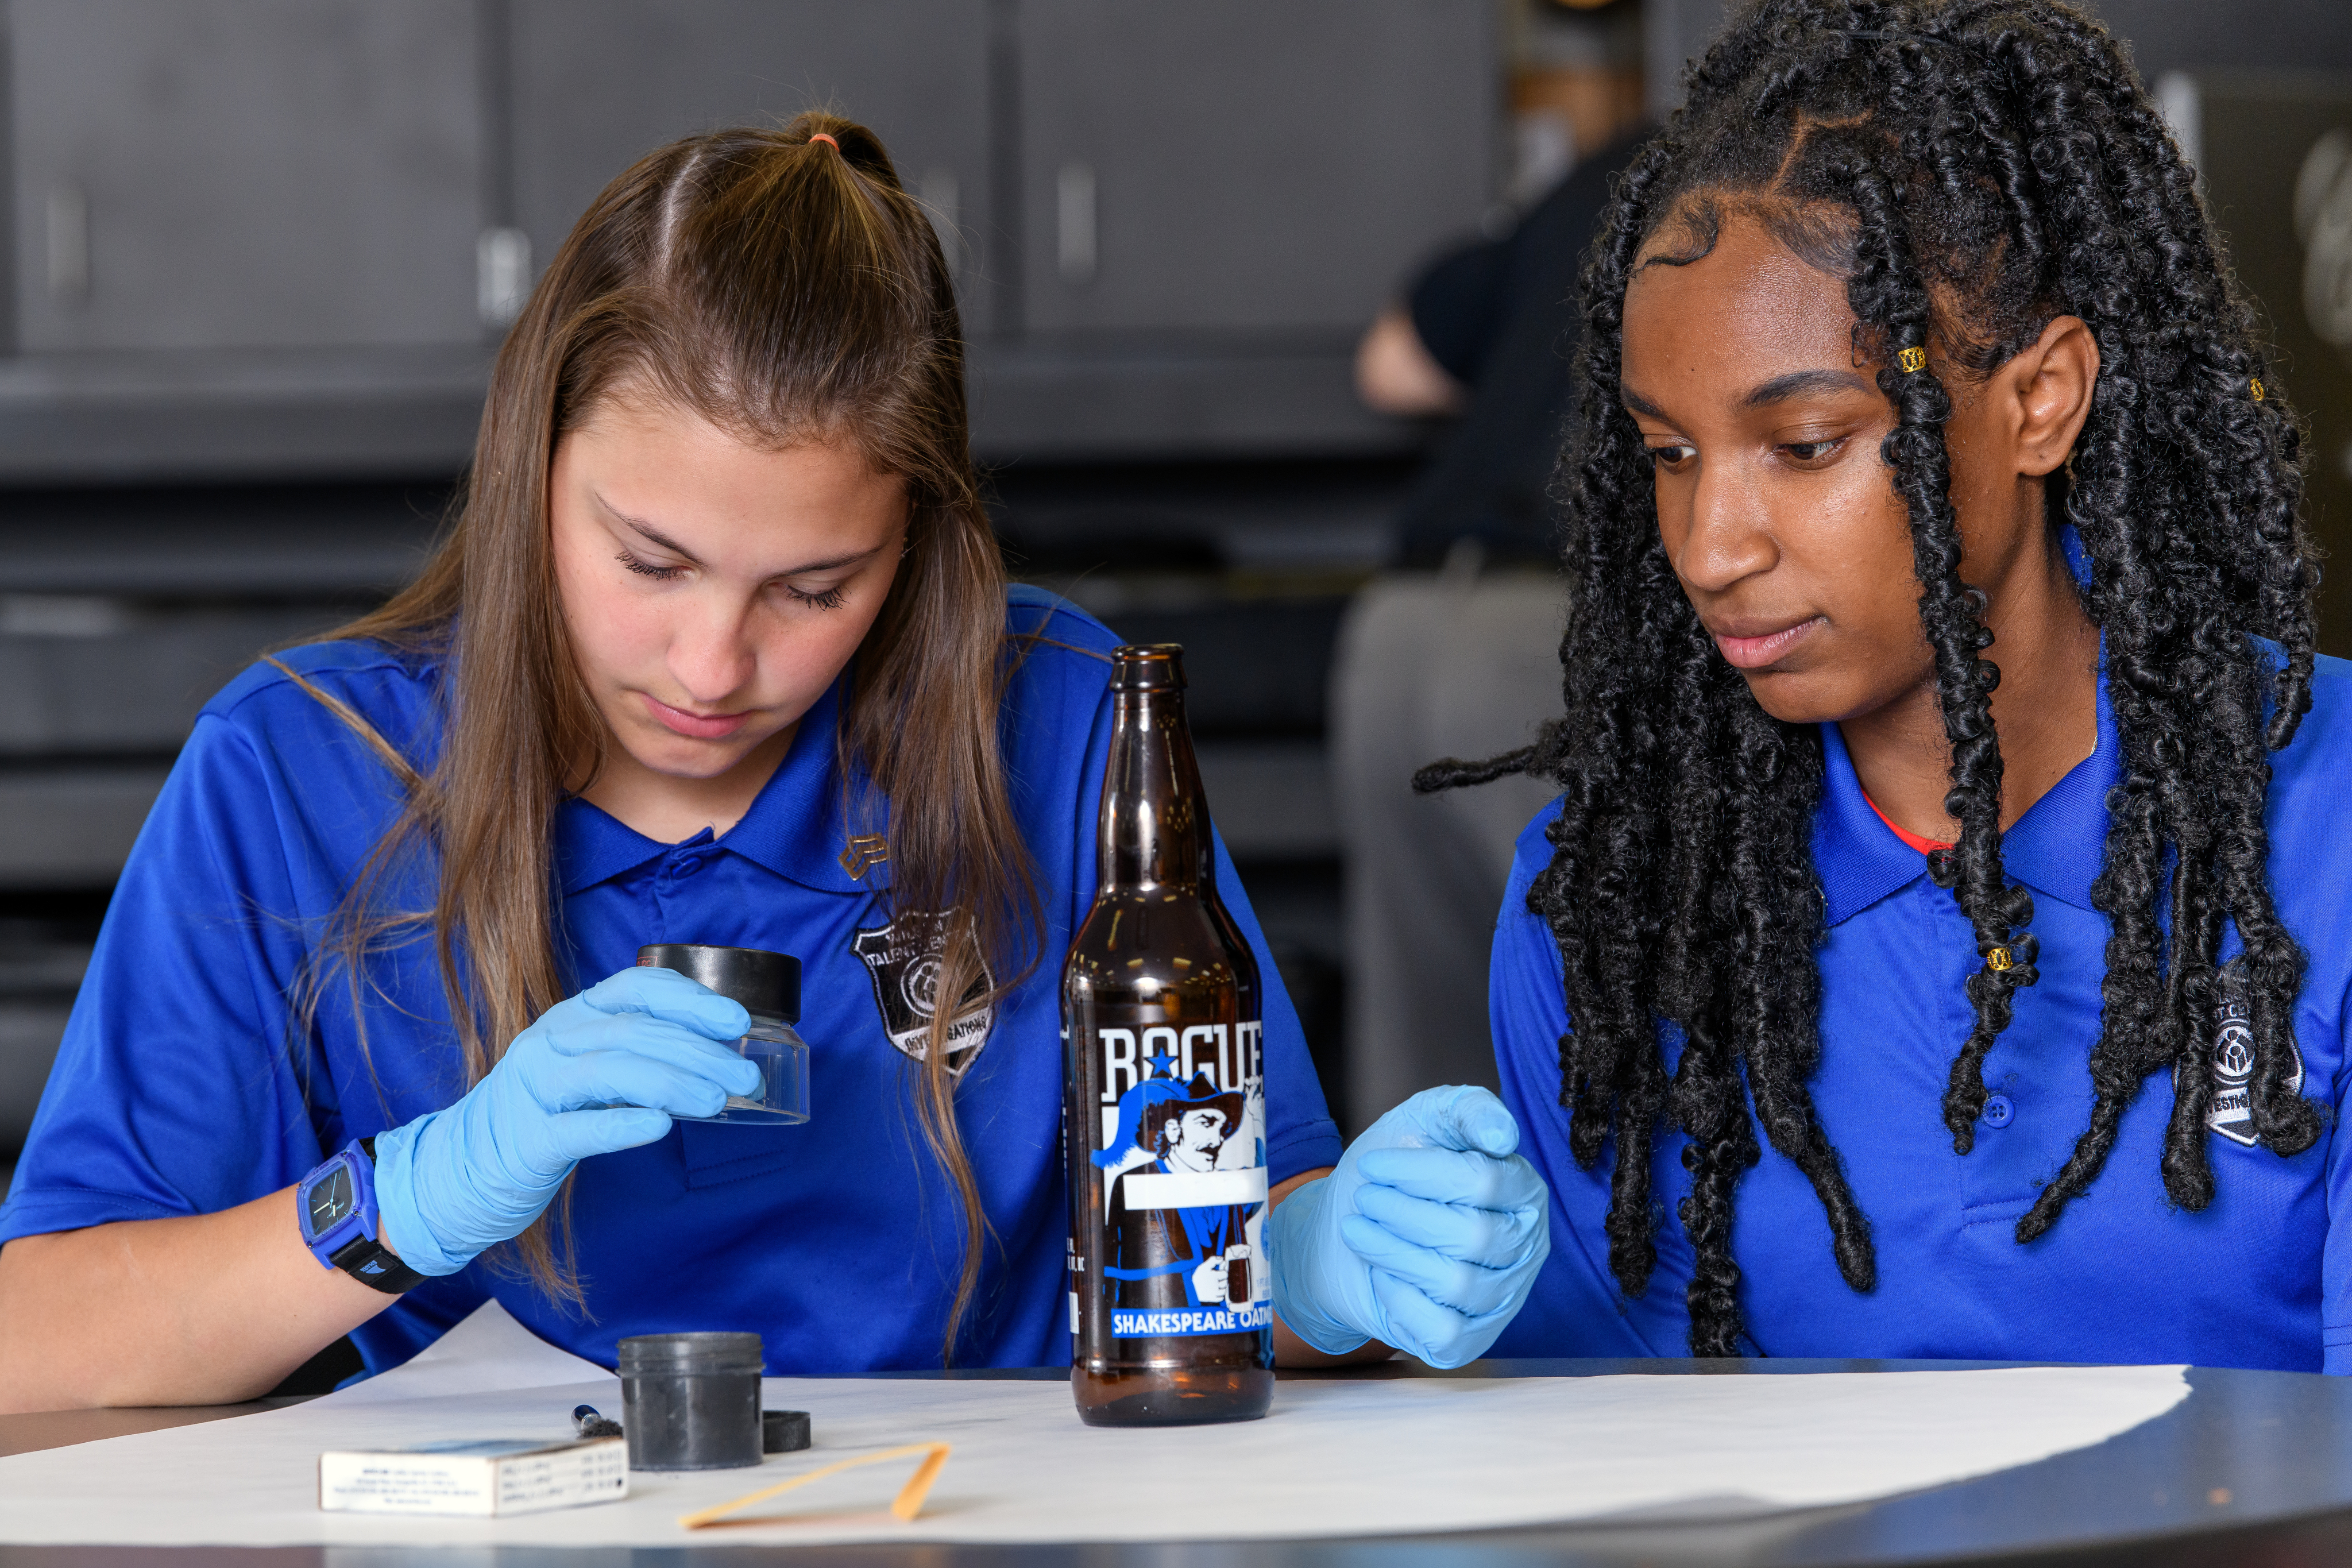 Two female Investigation students dust a bottle for fingerprints.